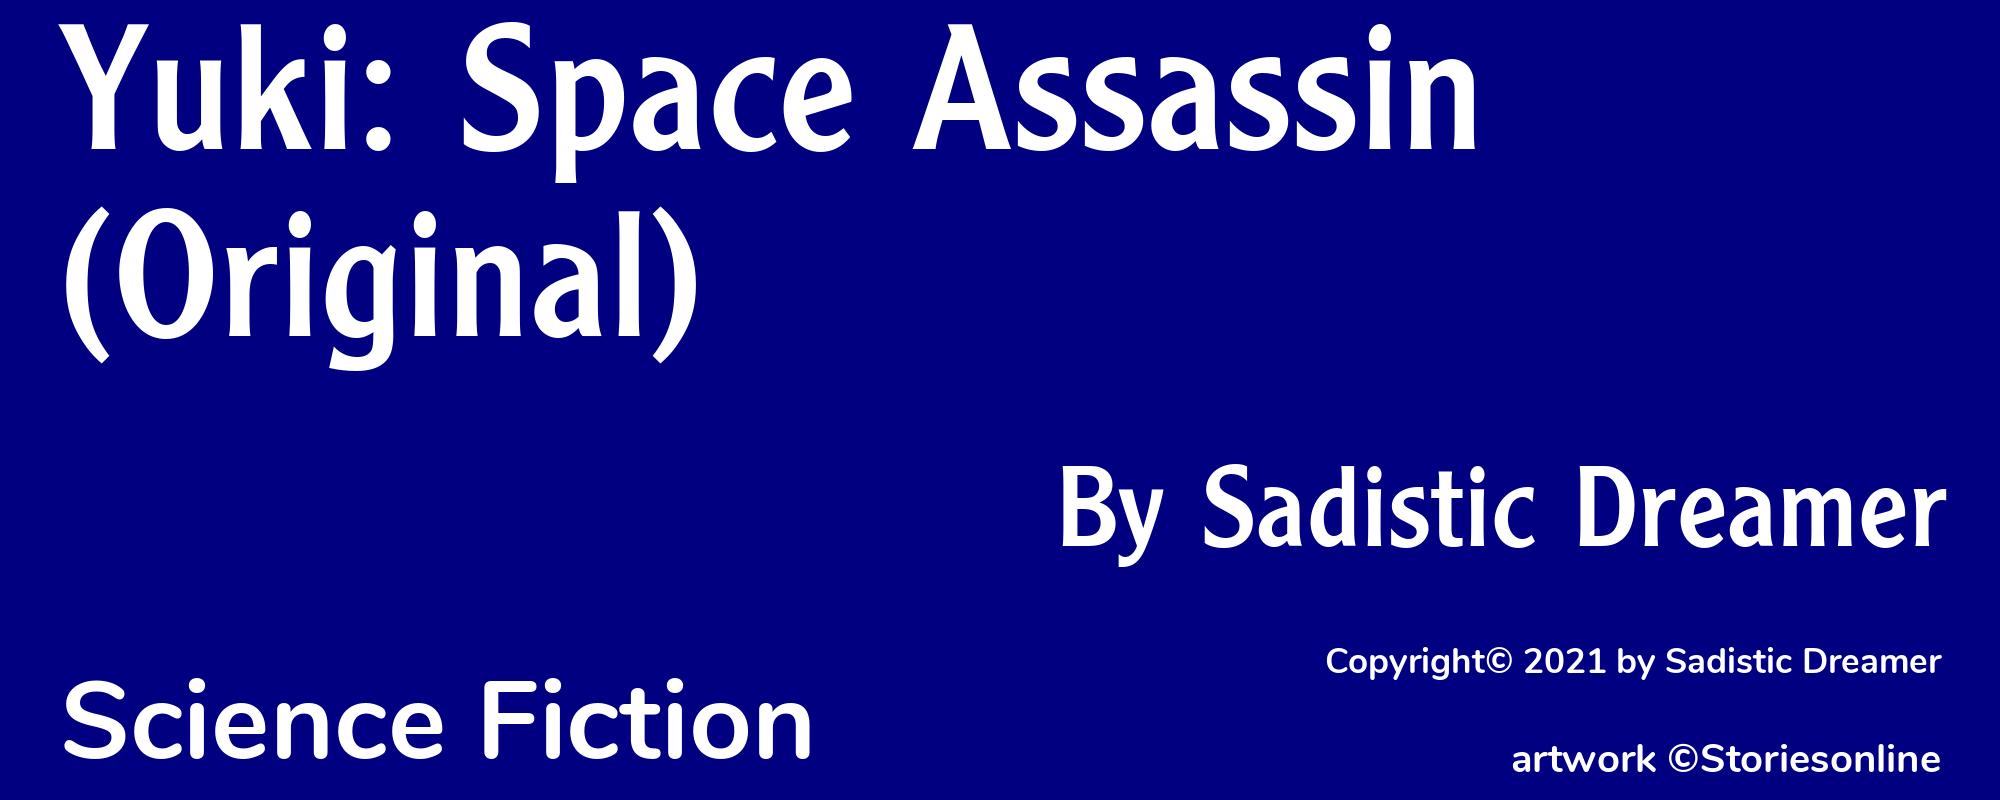 Yuki: Space Assassin (Original) - Cover